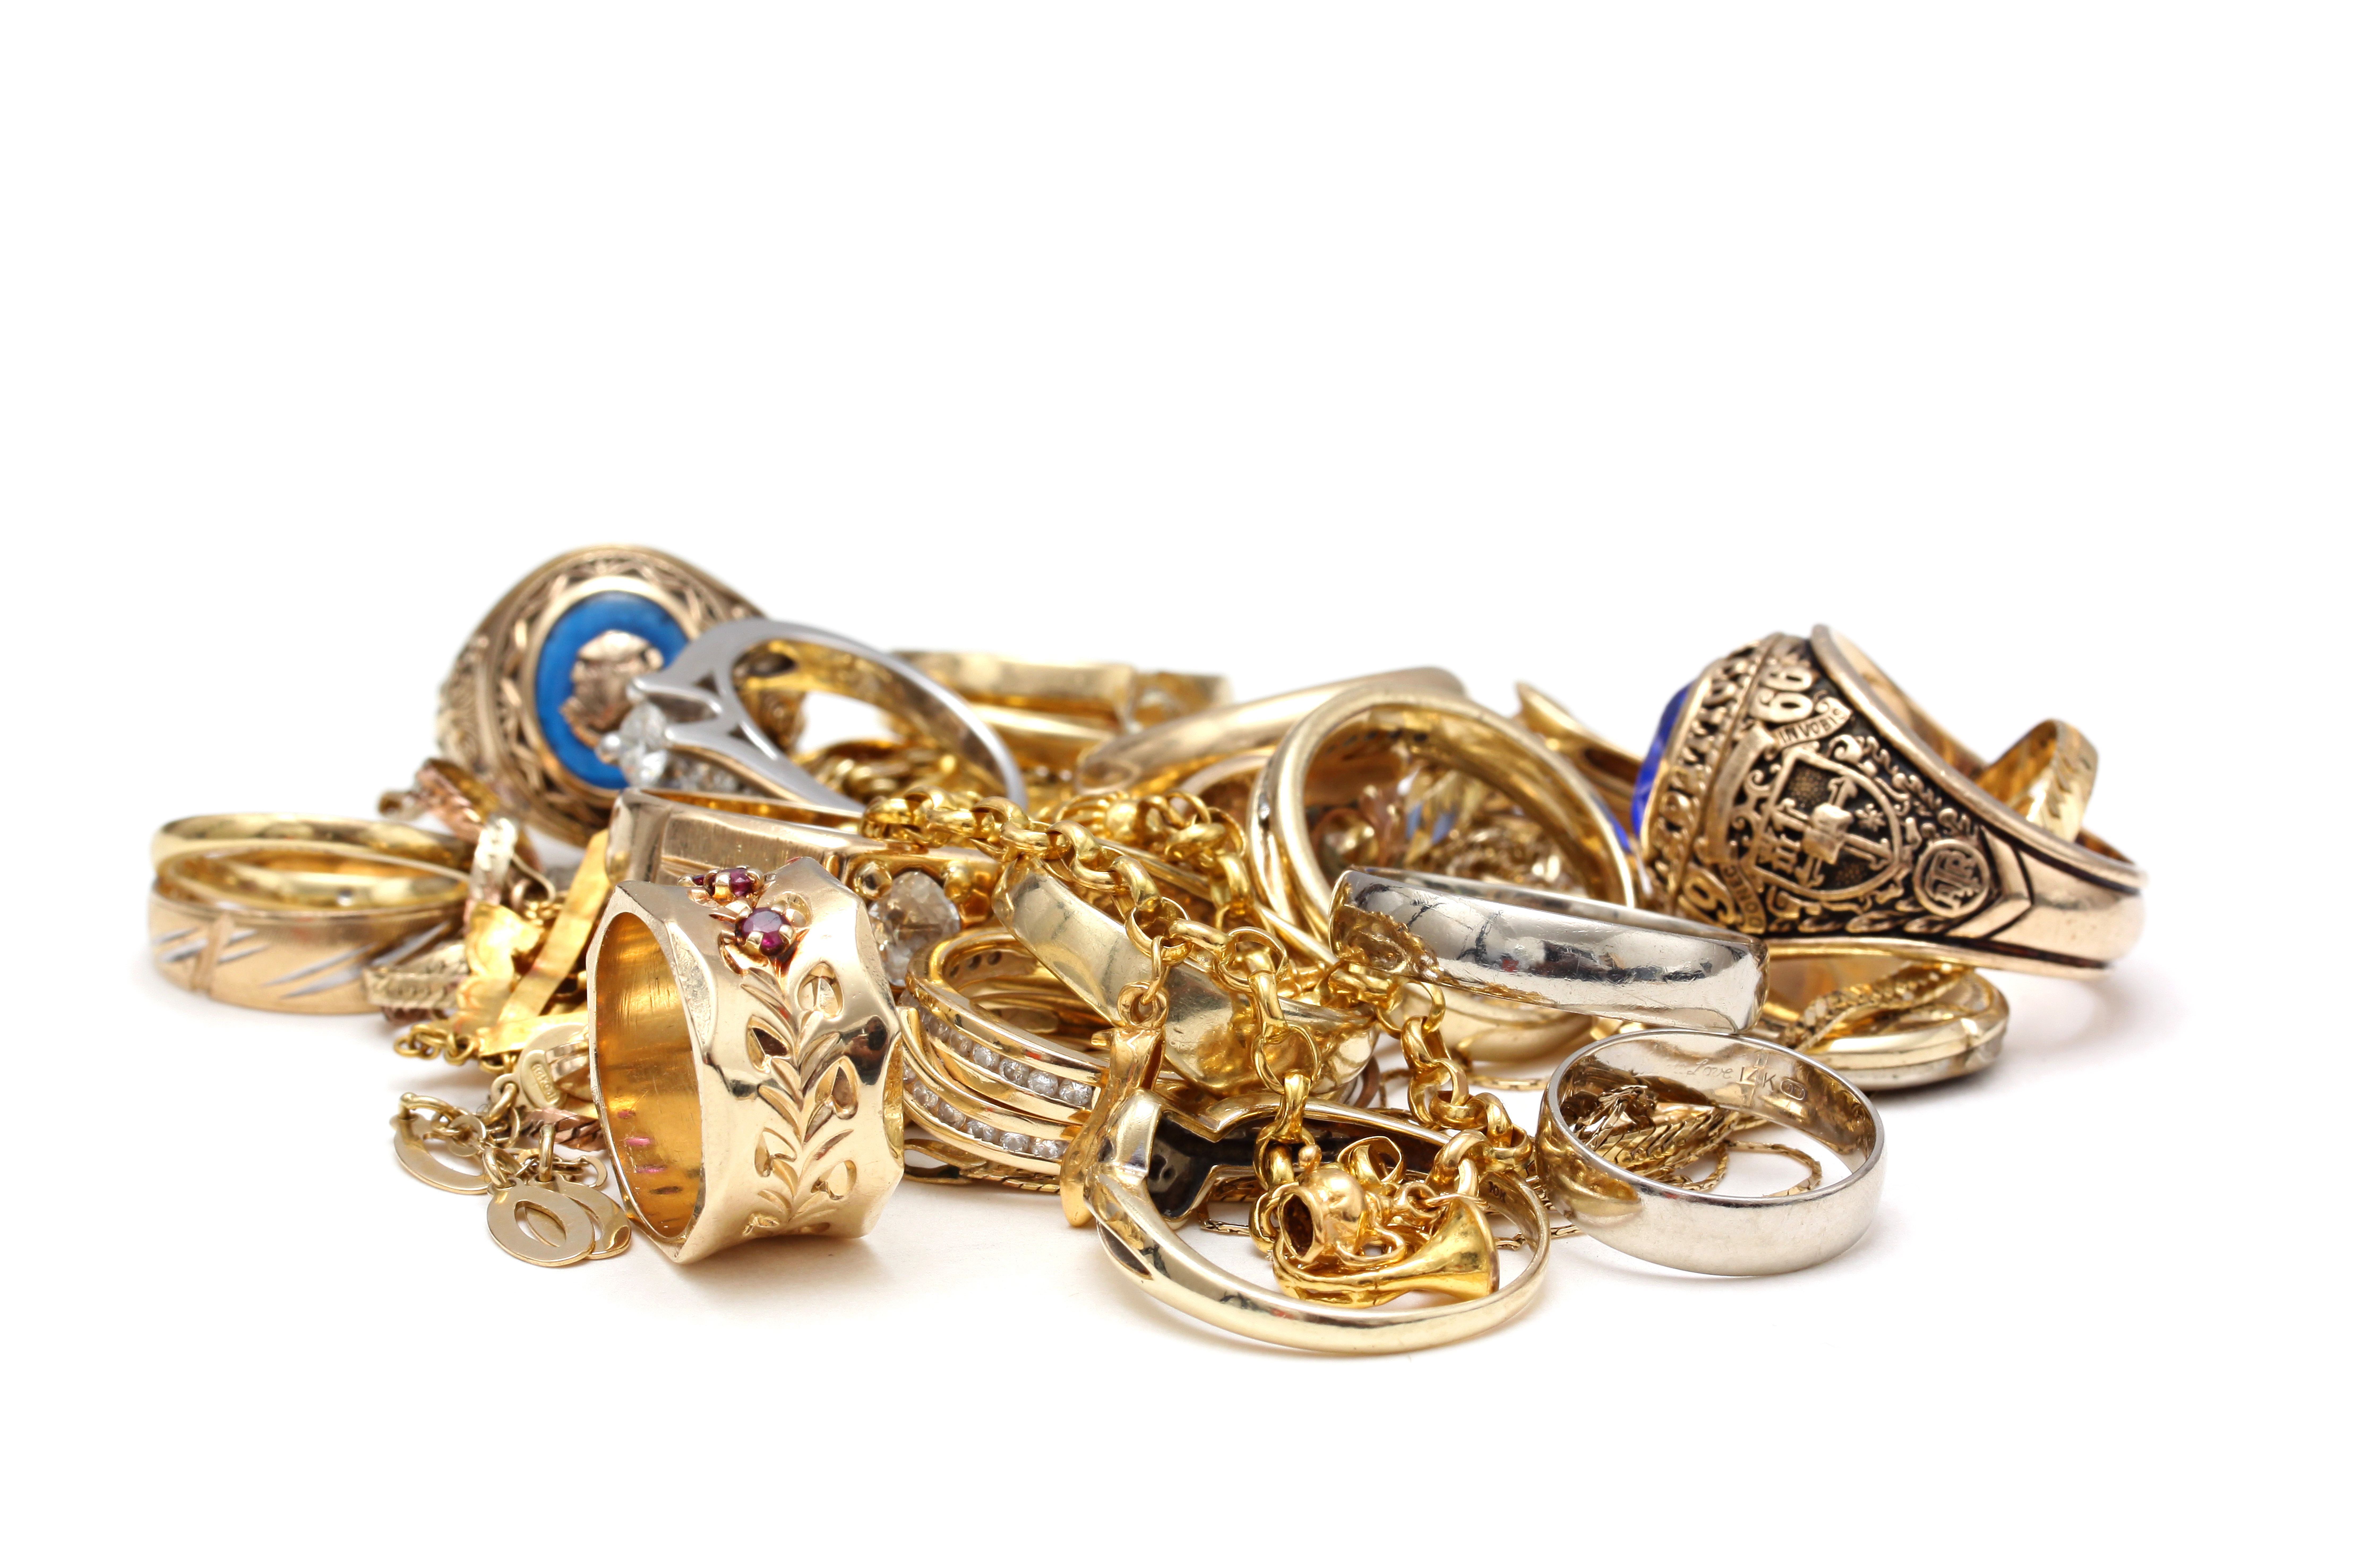 Orin Jewelers - We Buy Gold in Northville, Garden City